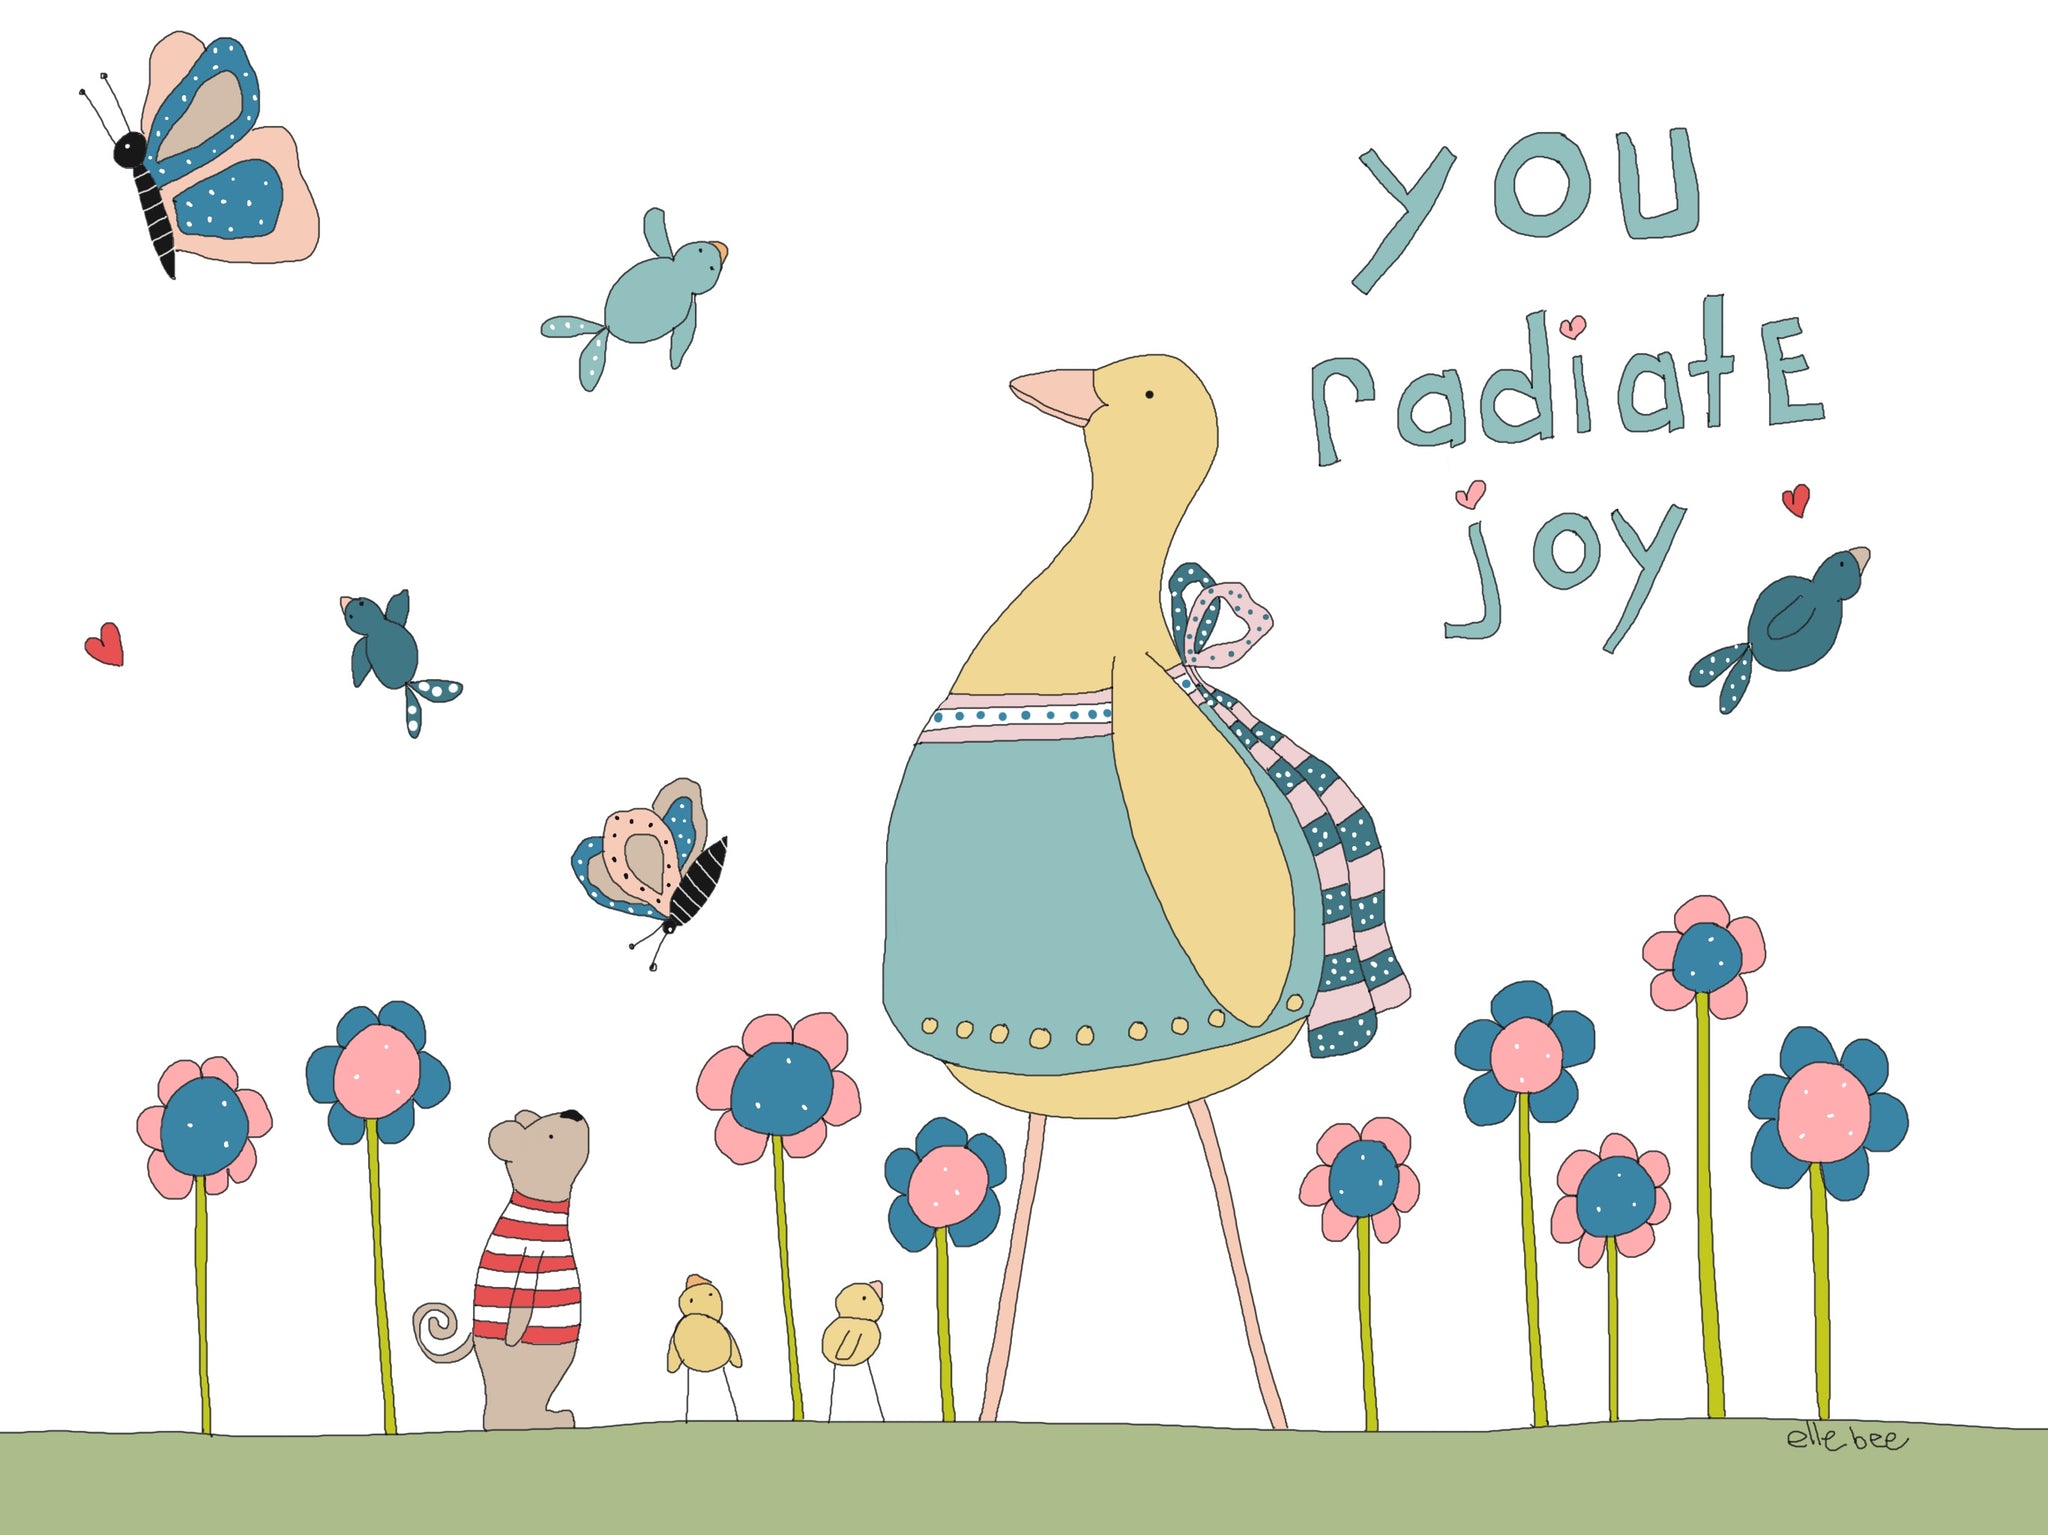 Greeting card "You radiate joy"